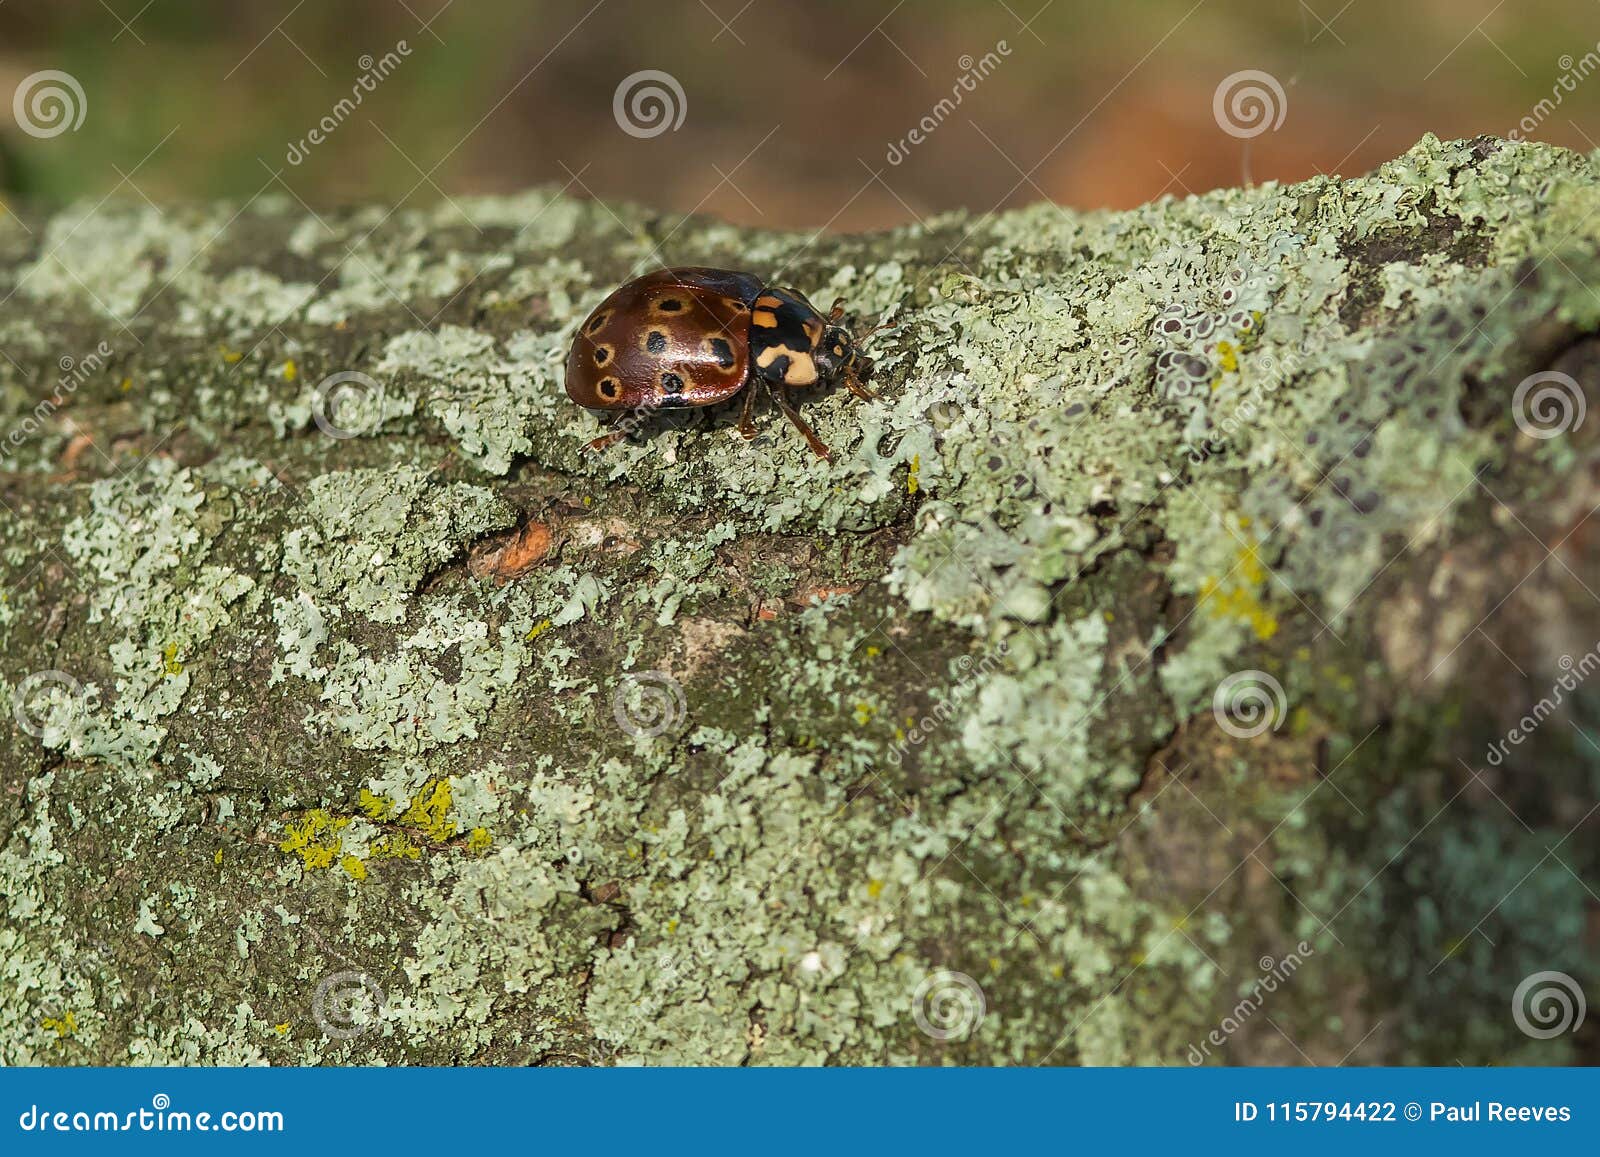 eye-spotted lady beetle - anatis mali